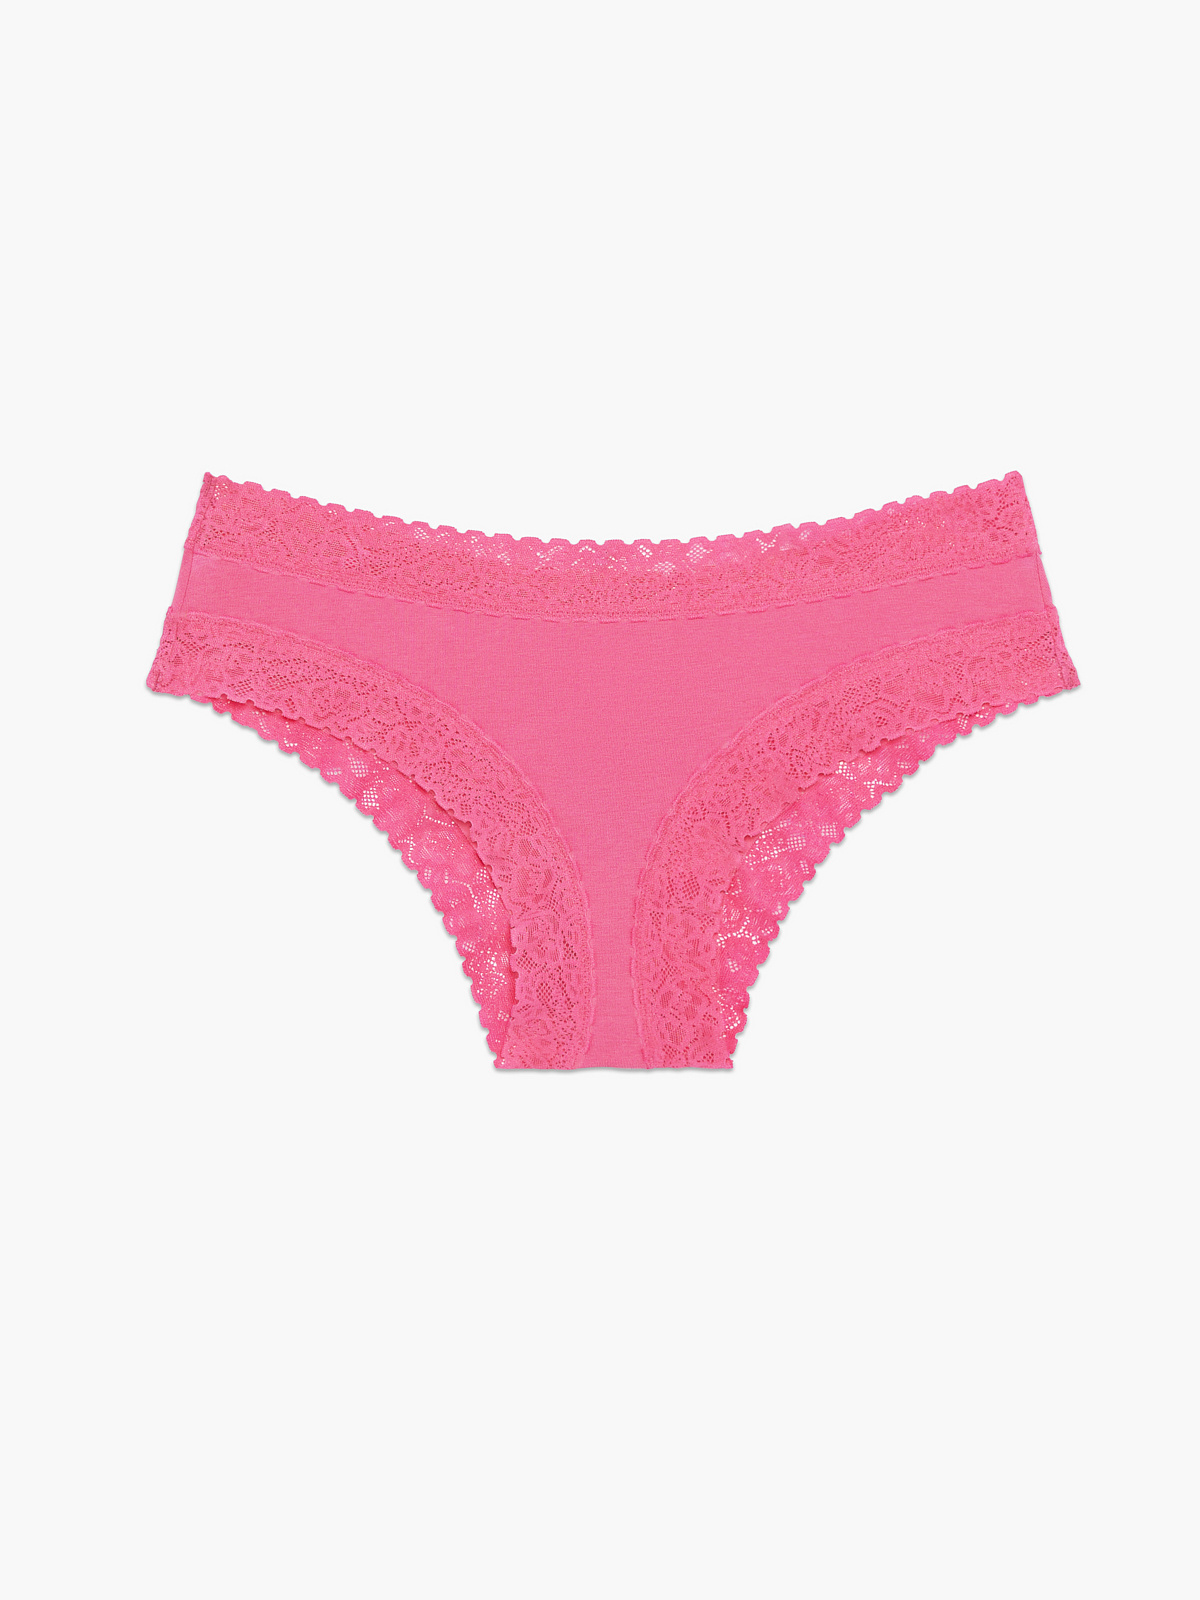 Victoria's Secret Very Sexy Cheeky Satin Lace Trim Pink Panty Underwear XS